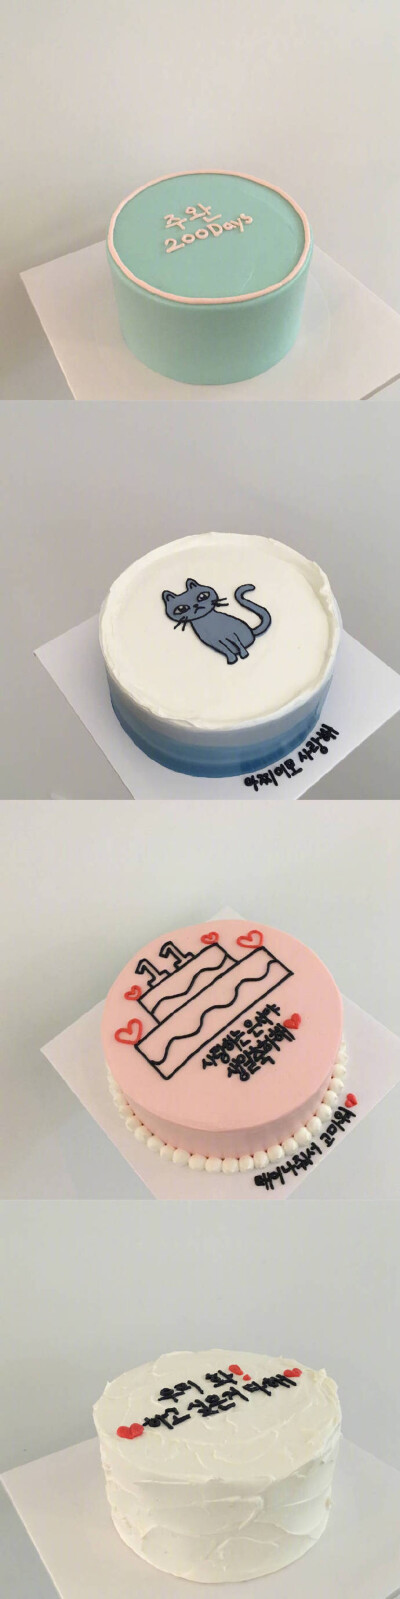 ins风蛋糕·韩系简约款·手绘款蛋糕